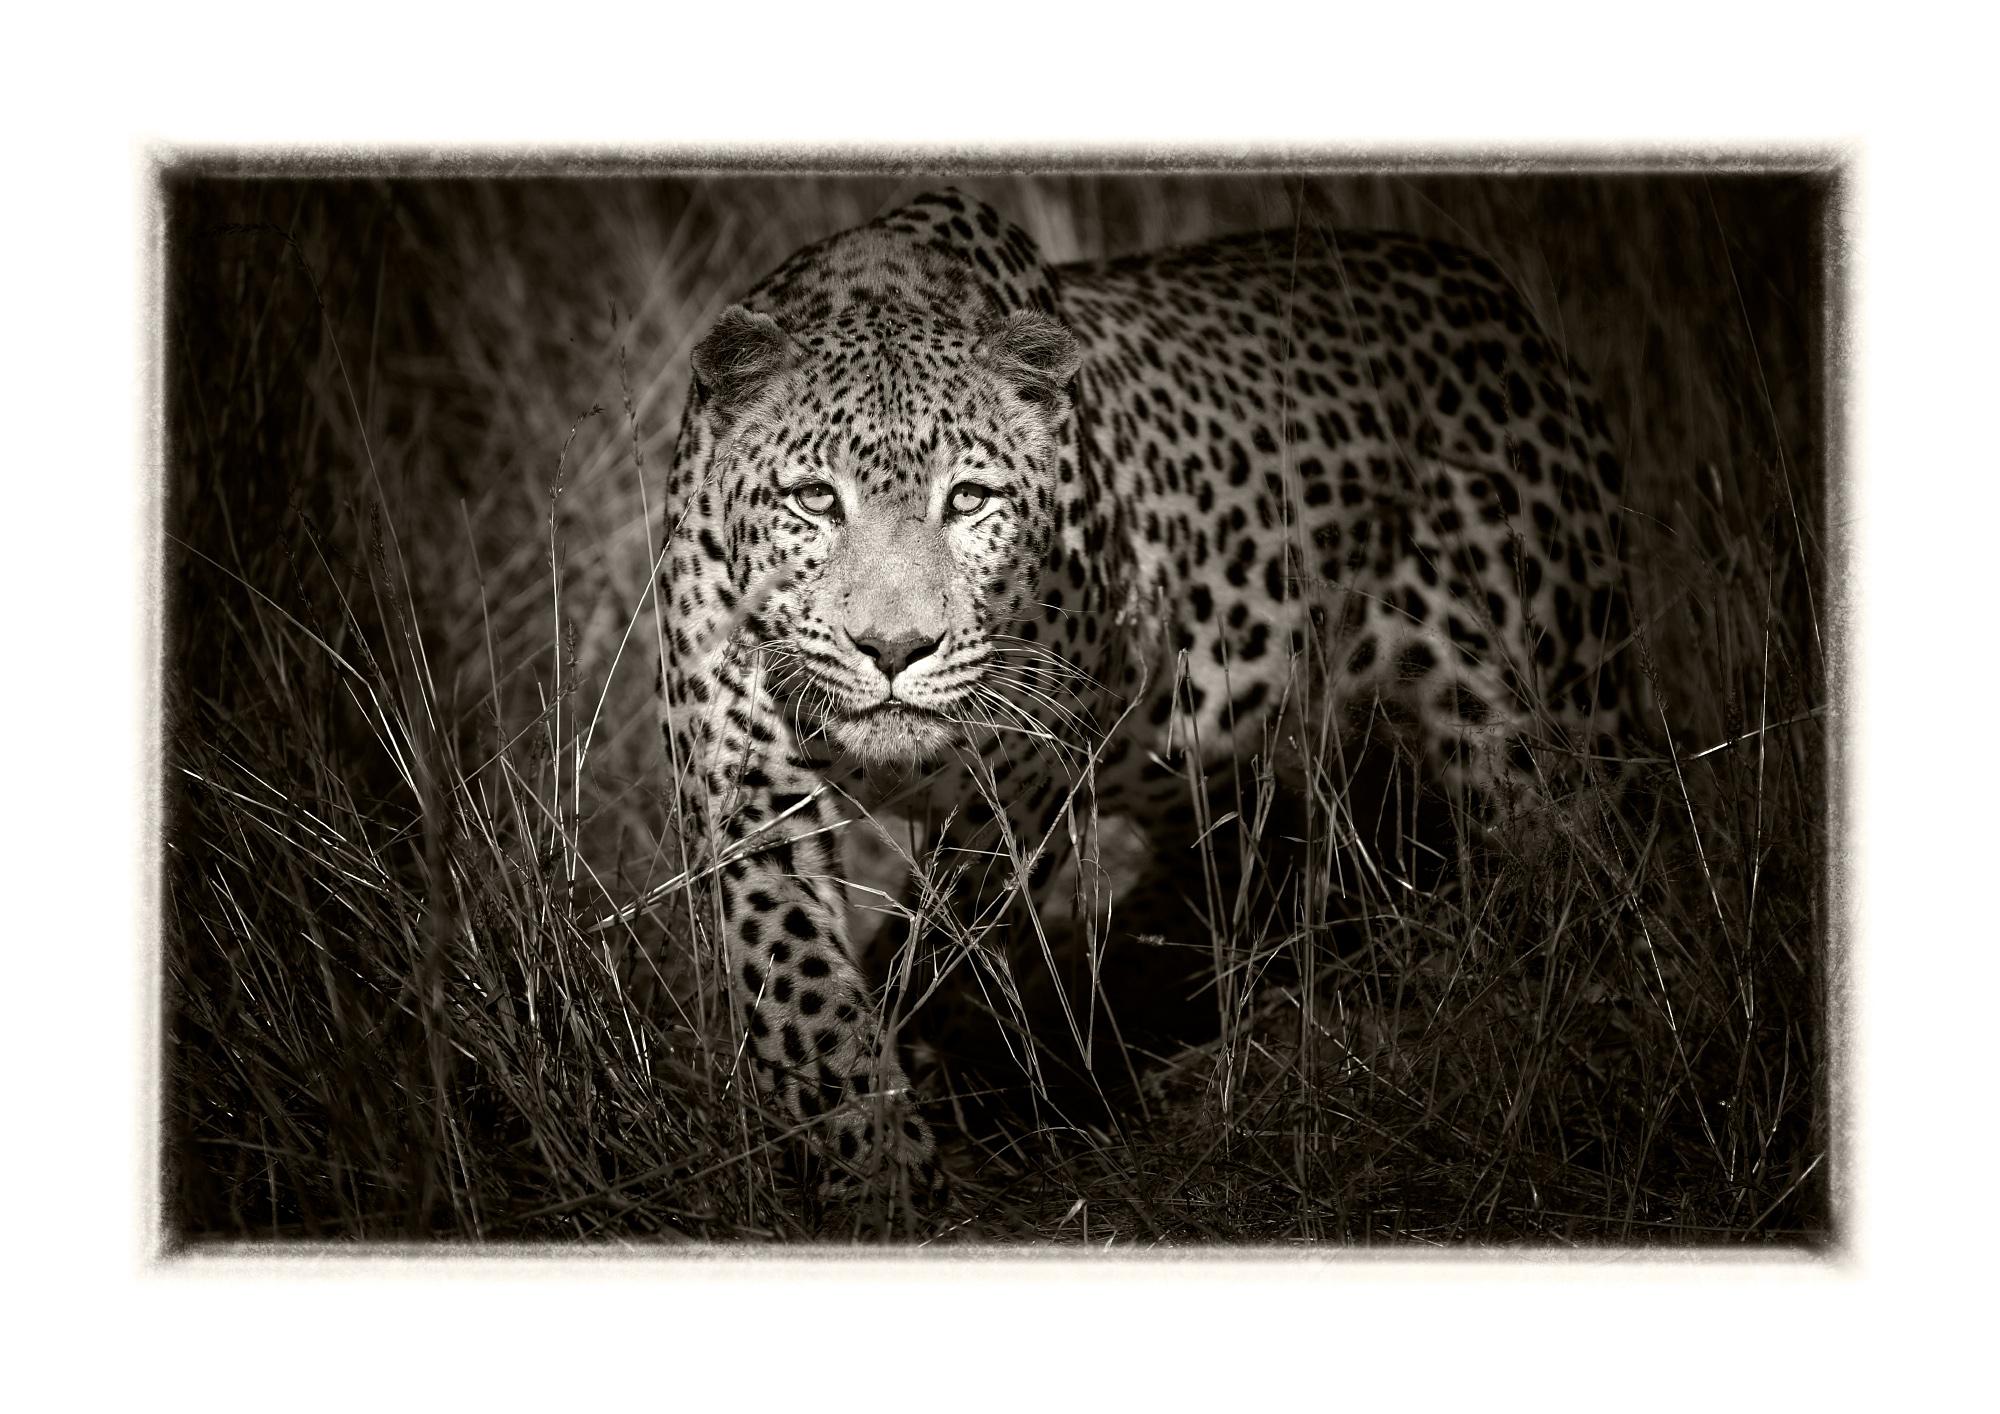 Namibian Etosha Leopard II, Black and White Photography, Fine Art Print by Rainer Martini For Sale